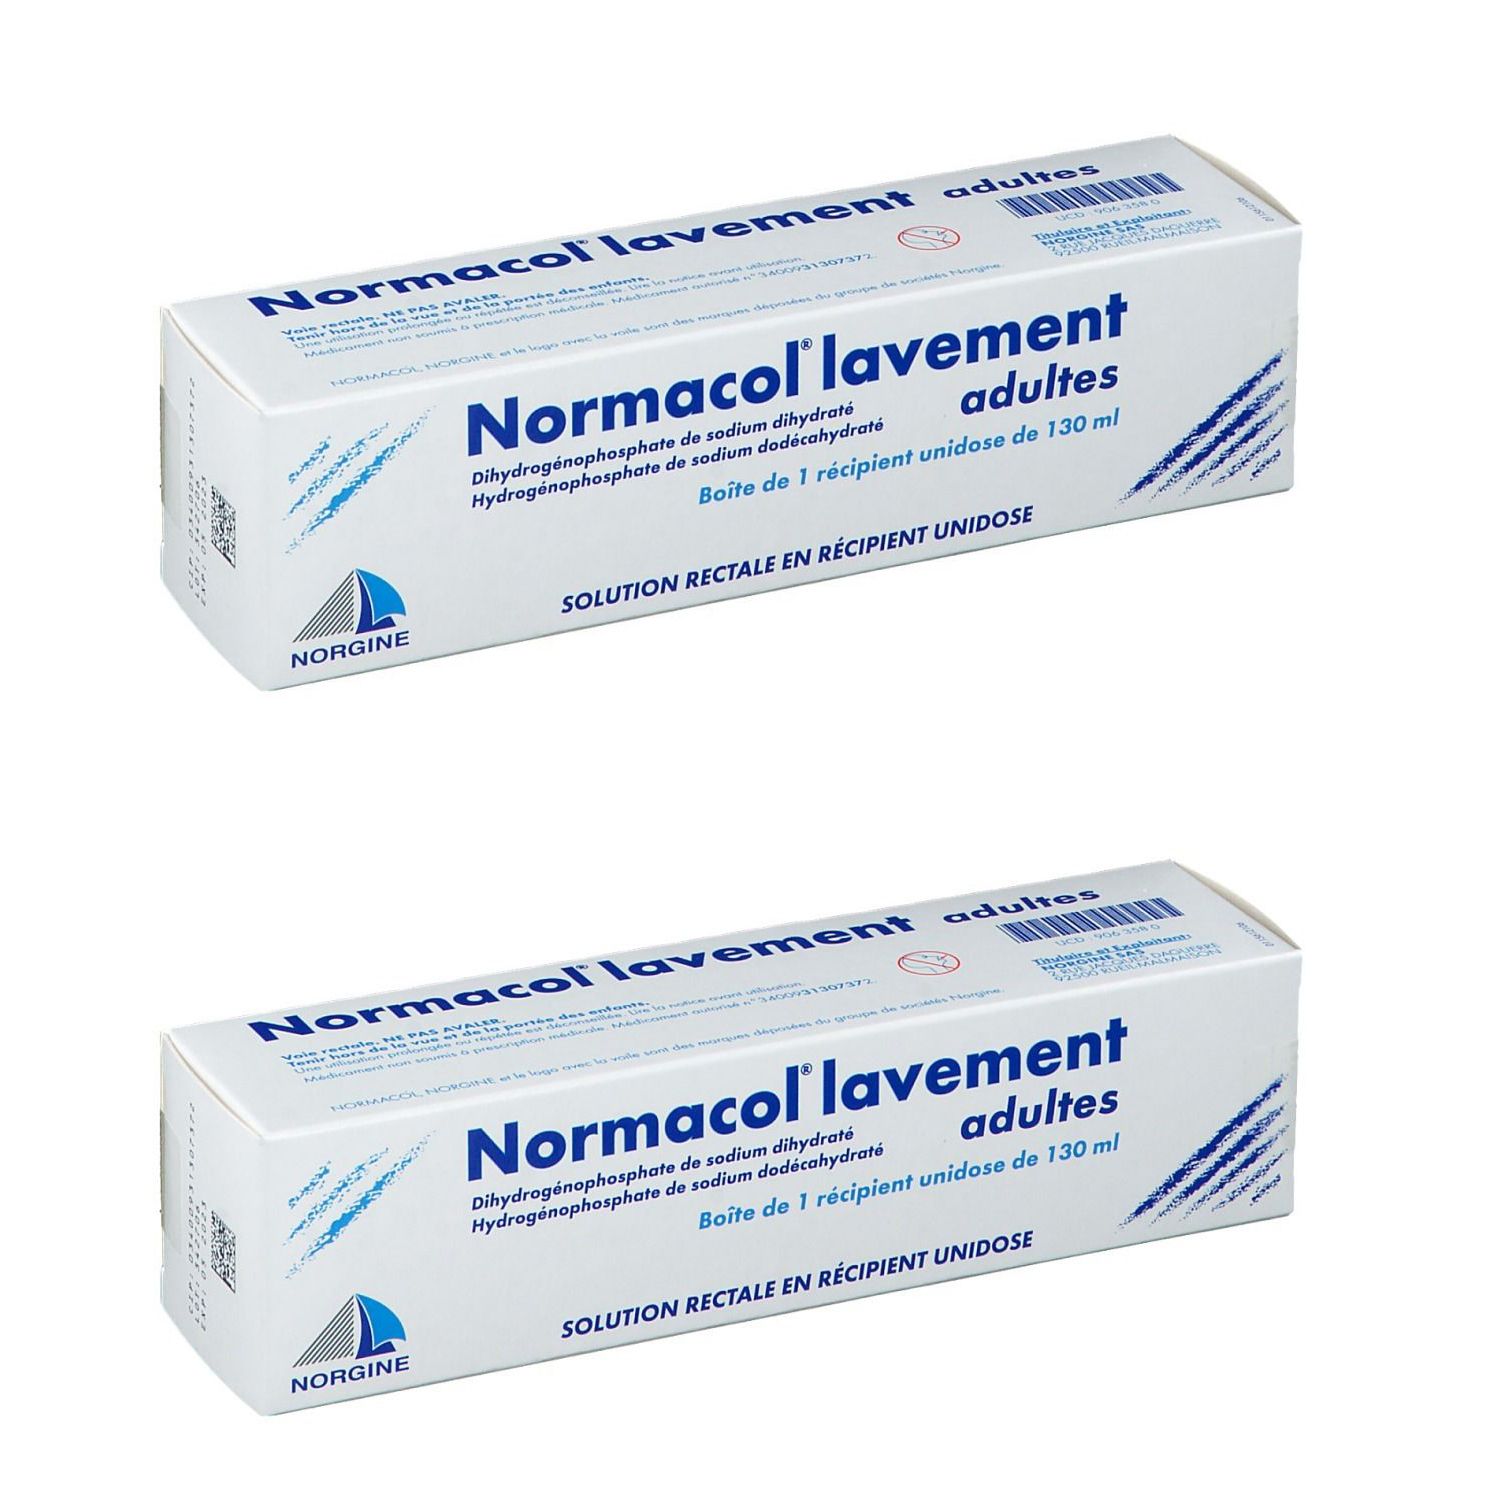 Norgine Normacol® lavement adults